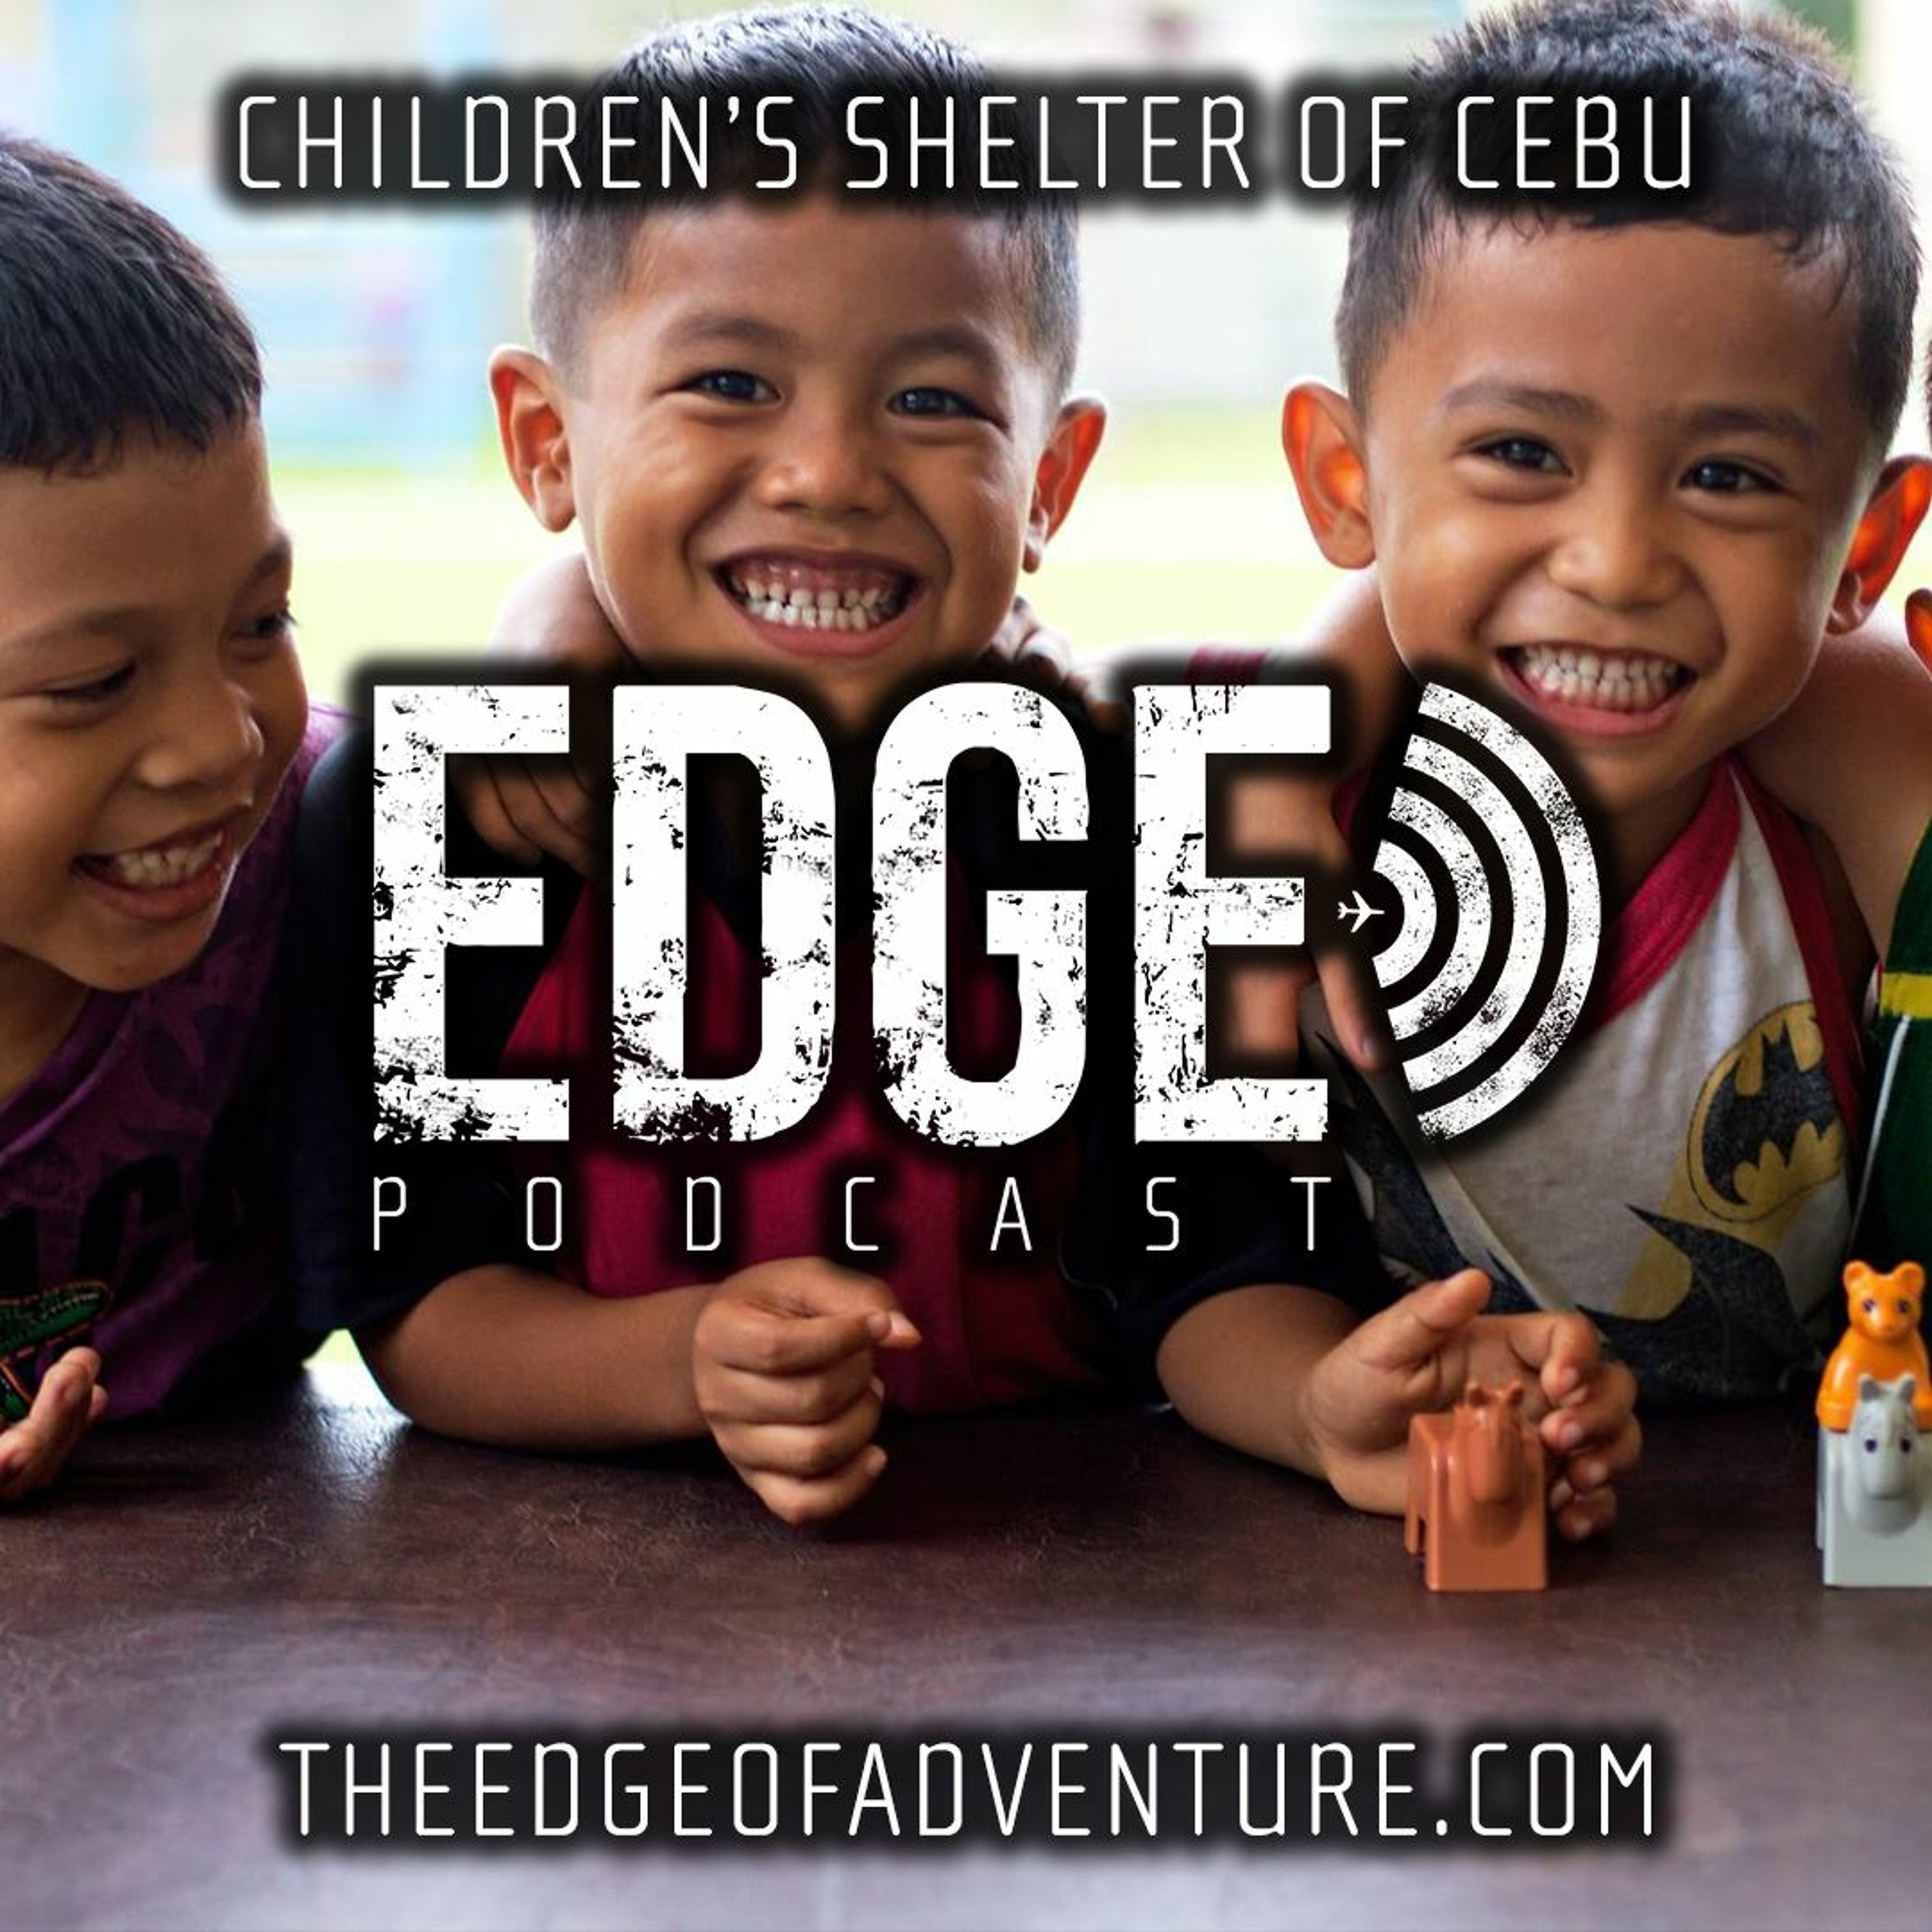 Children's Shelter of Cebu: The Philippines